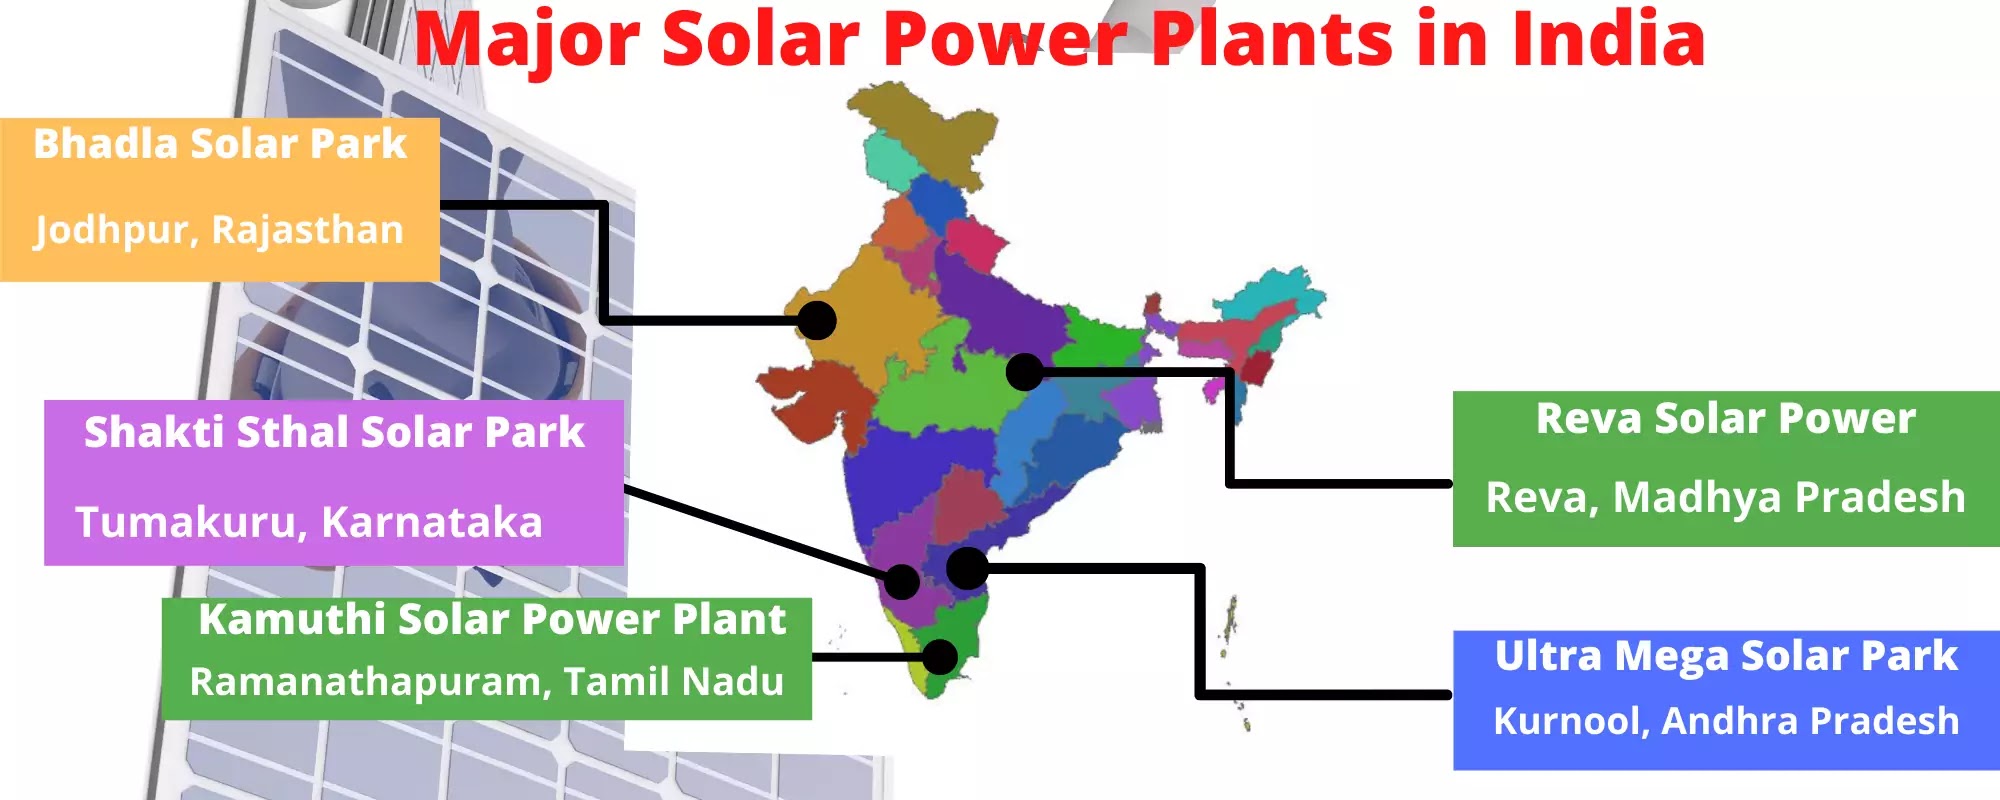 Major Solar Power Plants in India